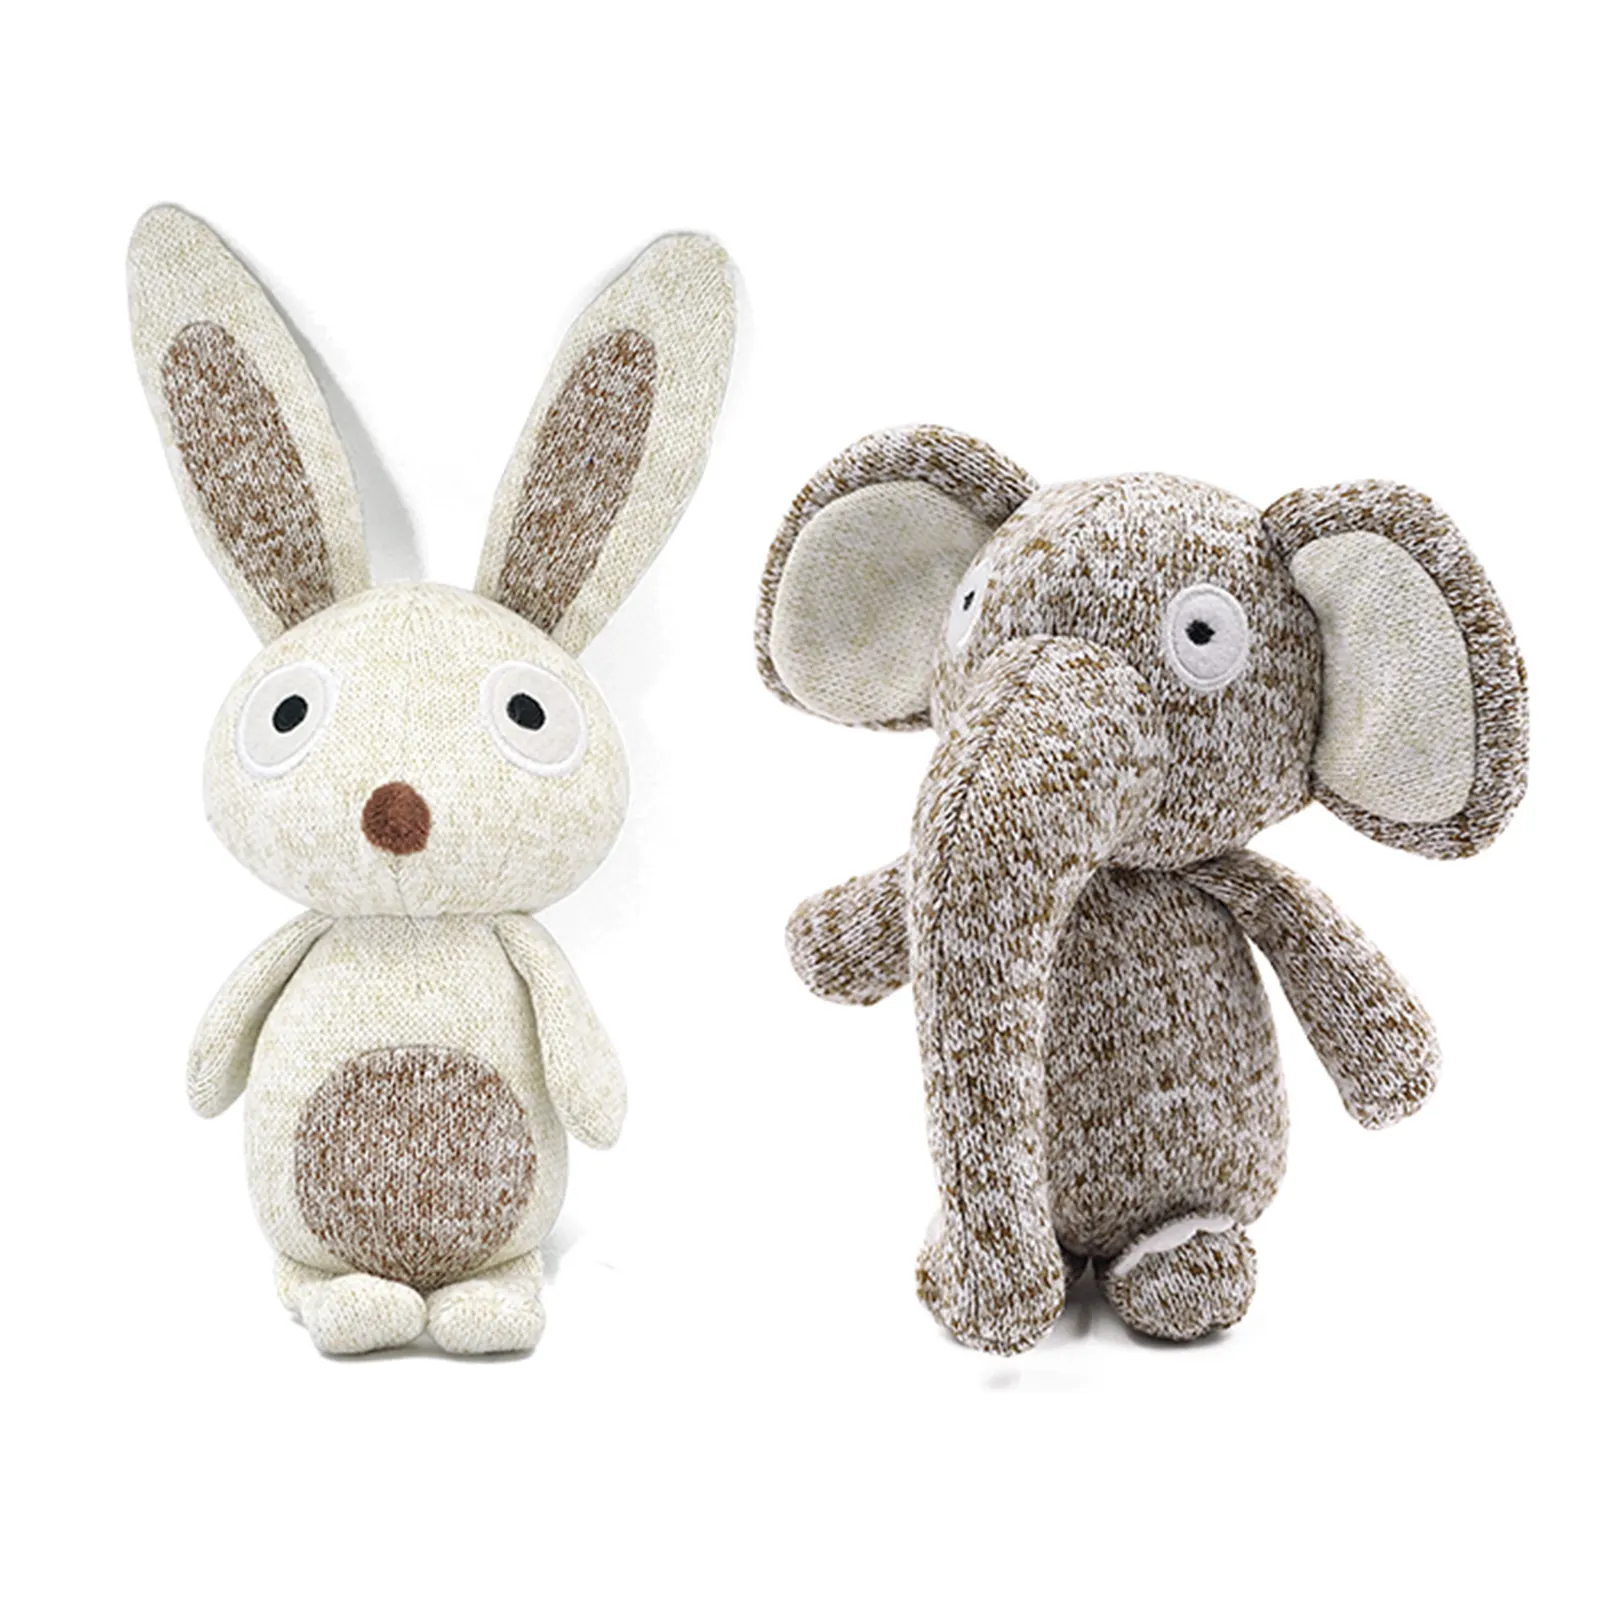 Stock Animal Designer Stuffed Plush Wholesale Dog Toys Knit Cute Elephant Rabbit Chew Pet Squeak Toys